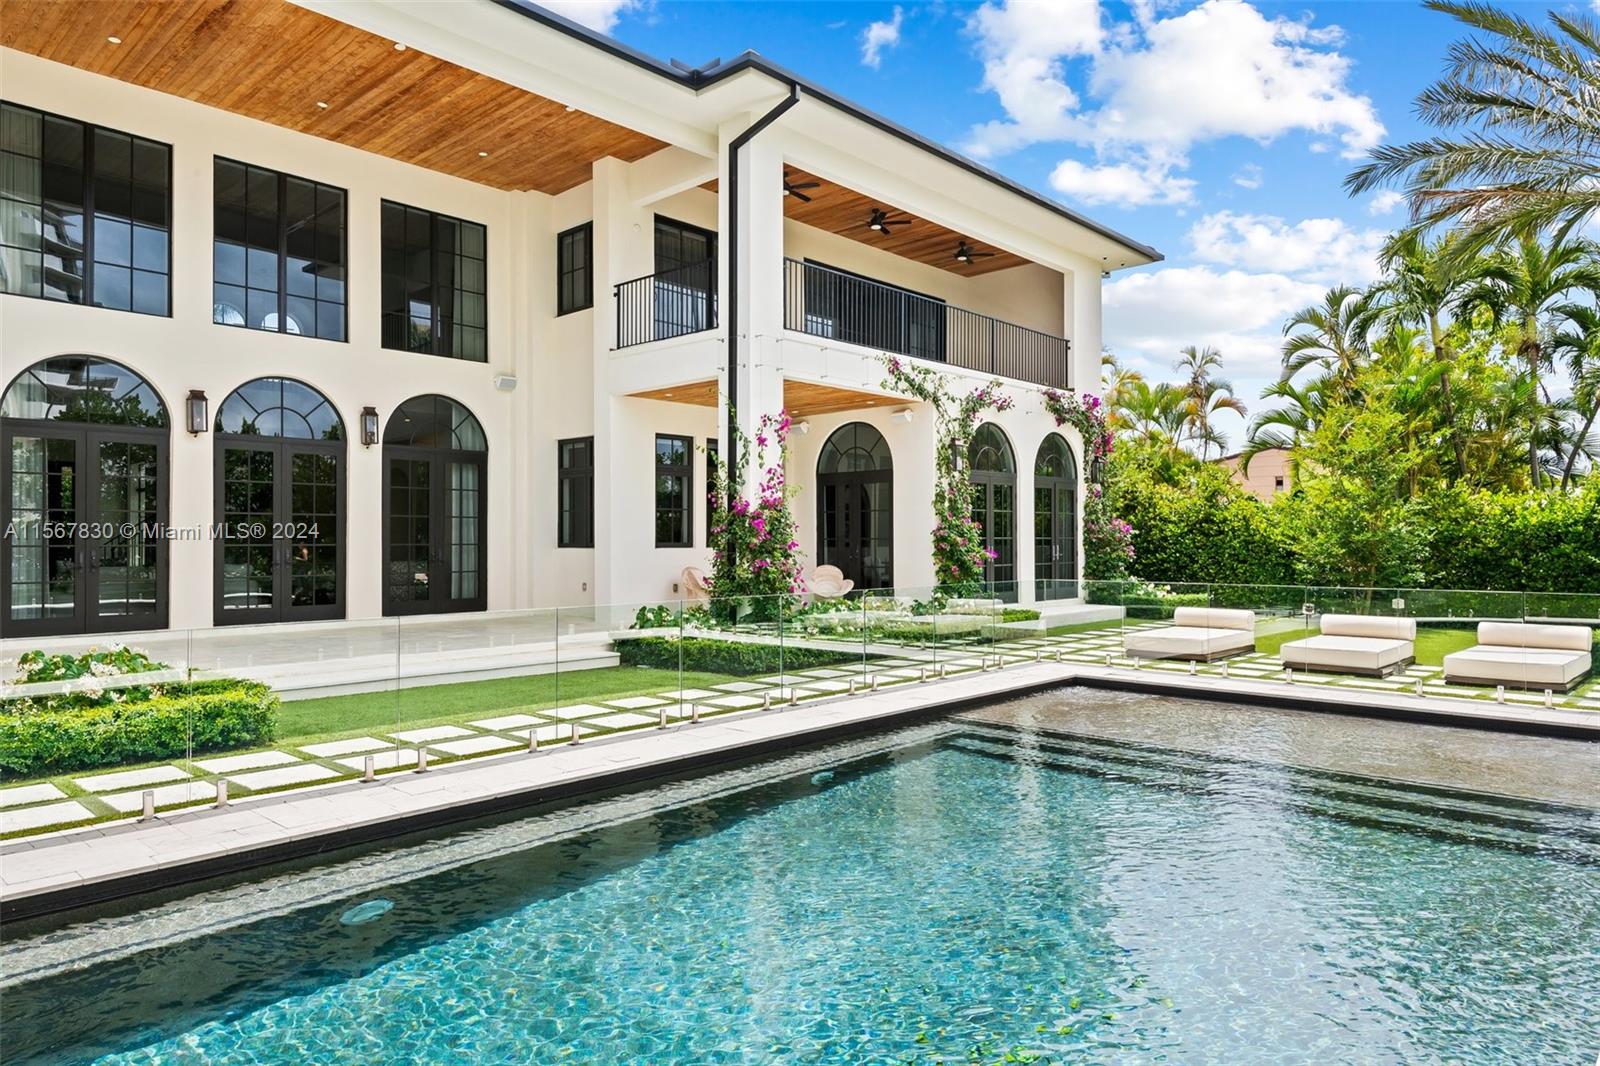 Property for Sale at 406 Tamarind Dr, Hallandale Beach, Broward County, Florida - Bedrooms: 6 
Bathrooms: 7  - $10,950,000